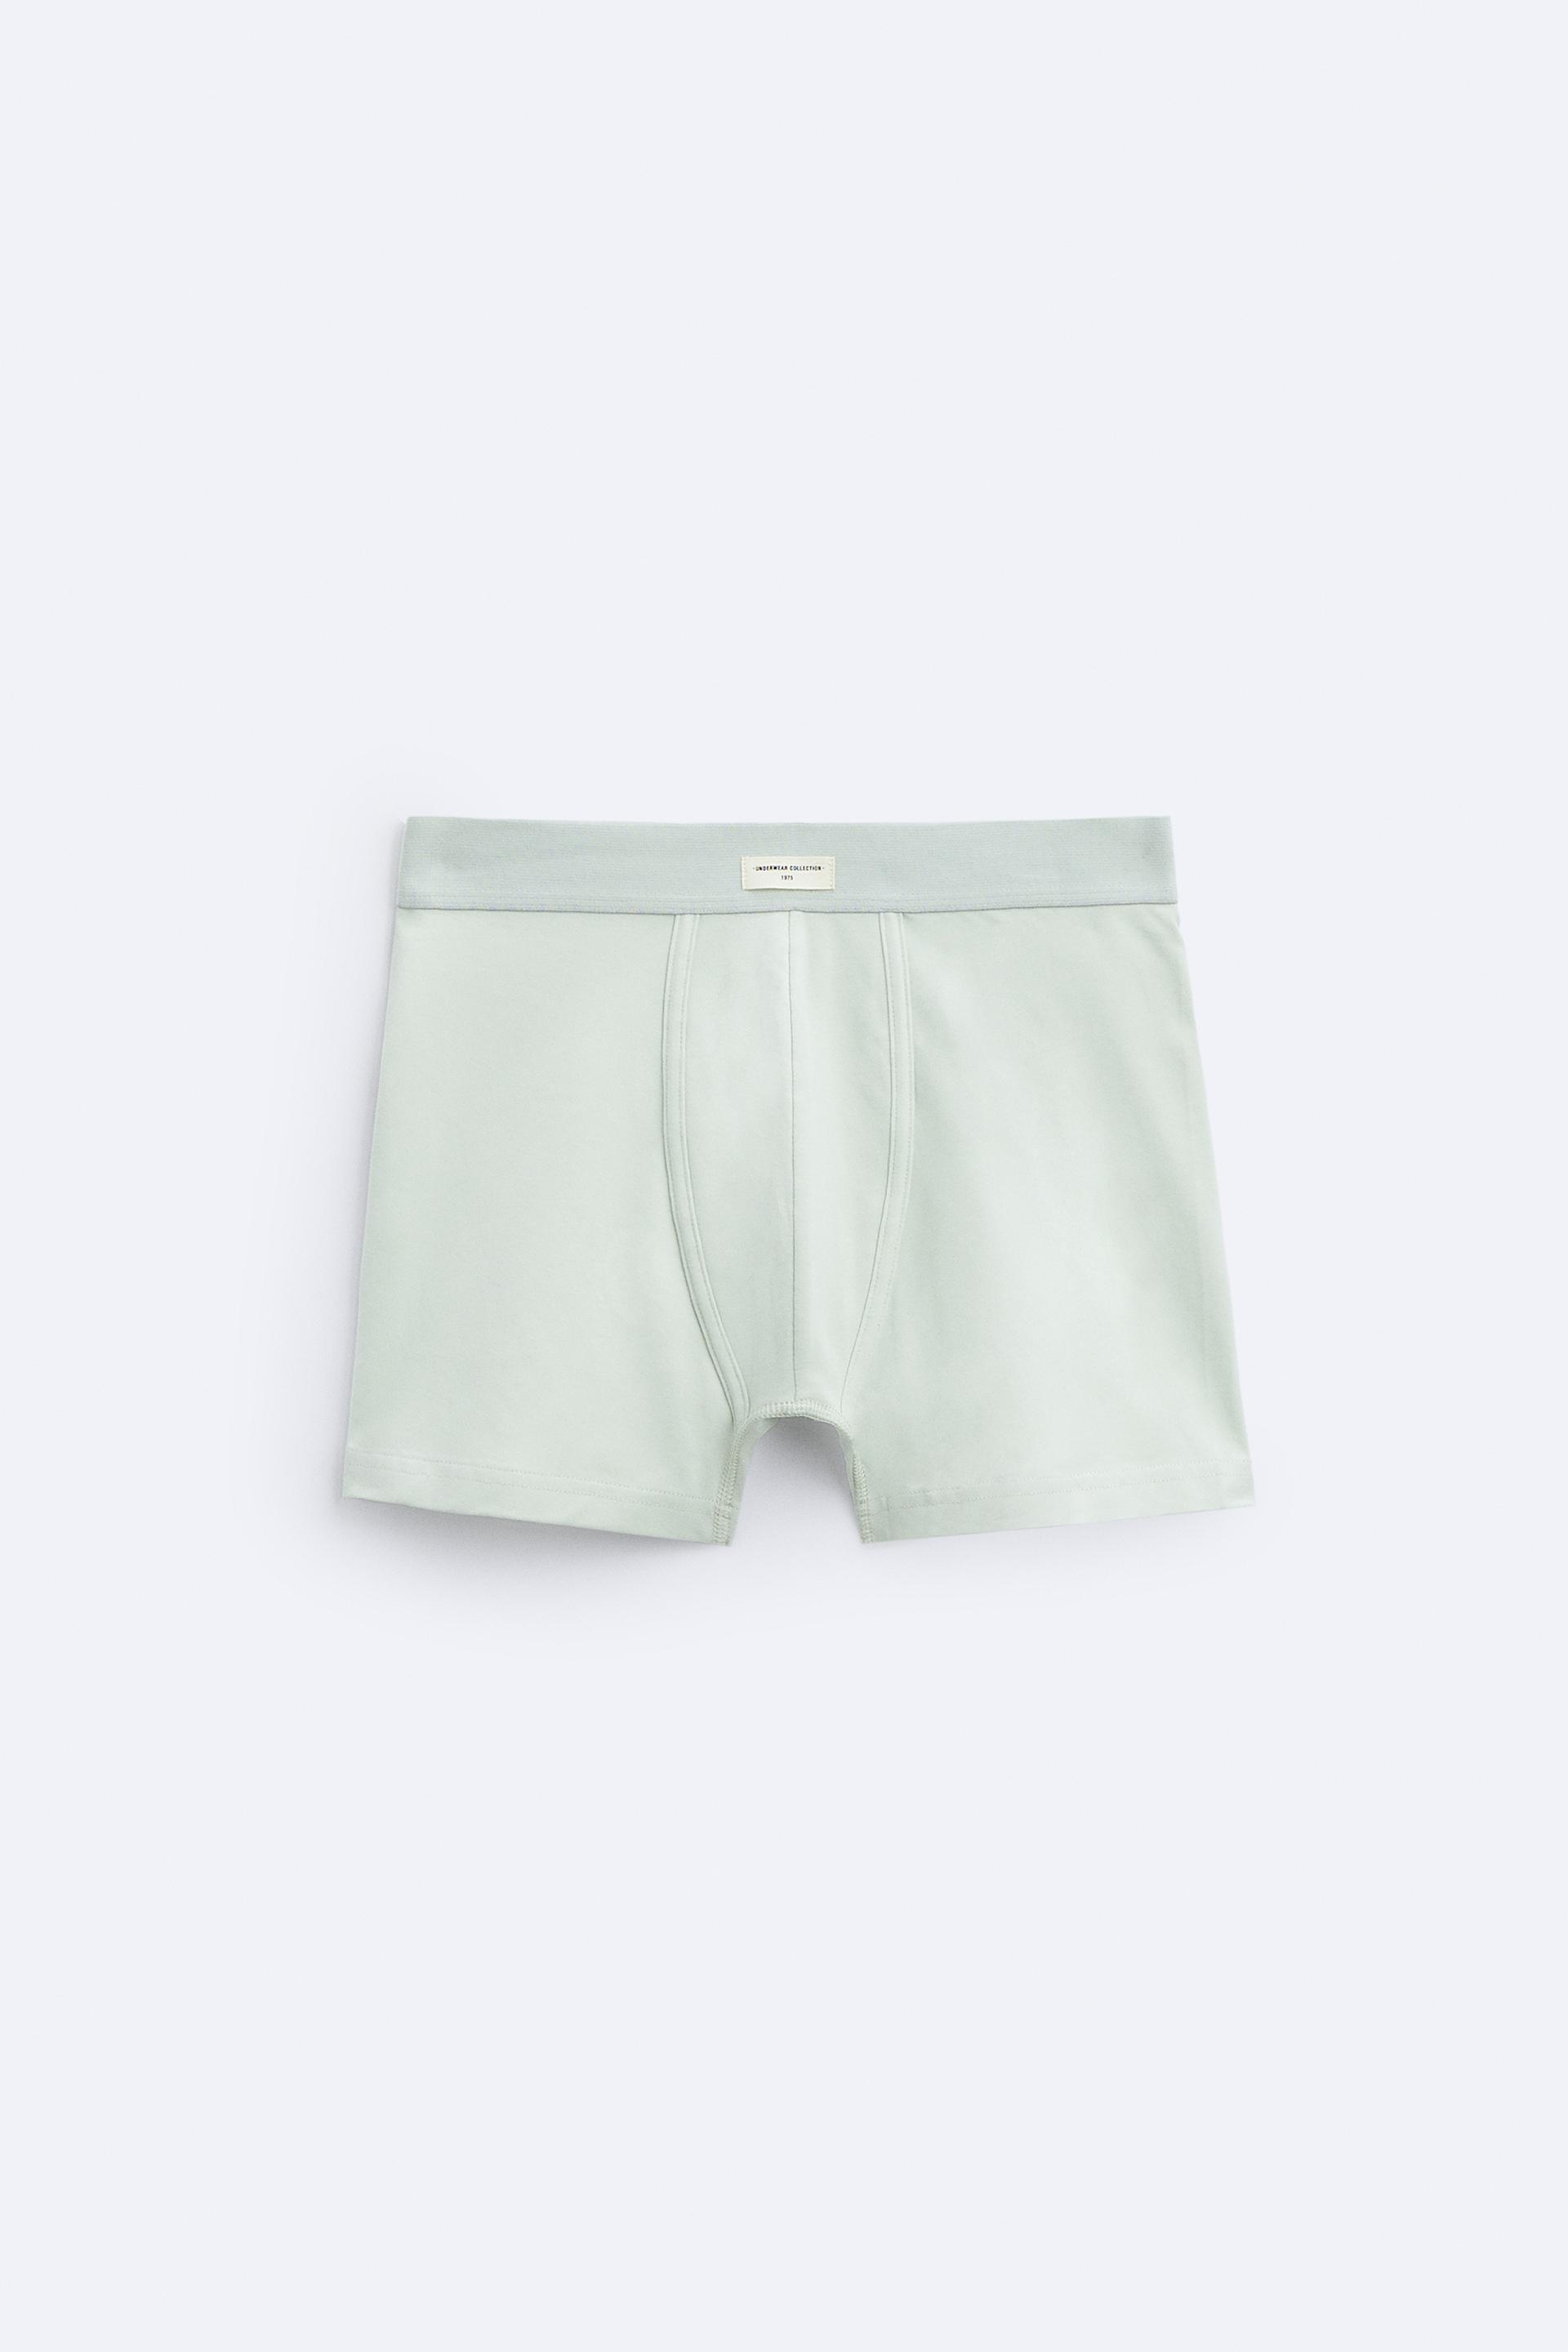 Zara Underwear - XS 12-24 mo